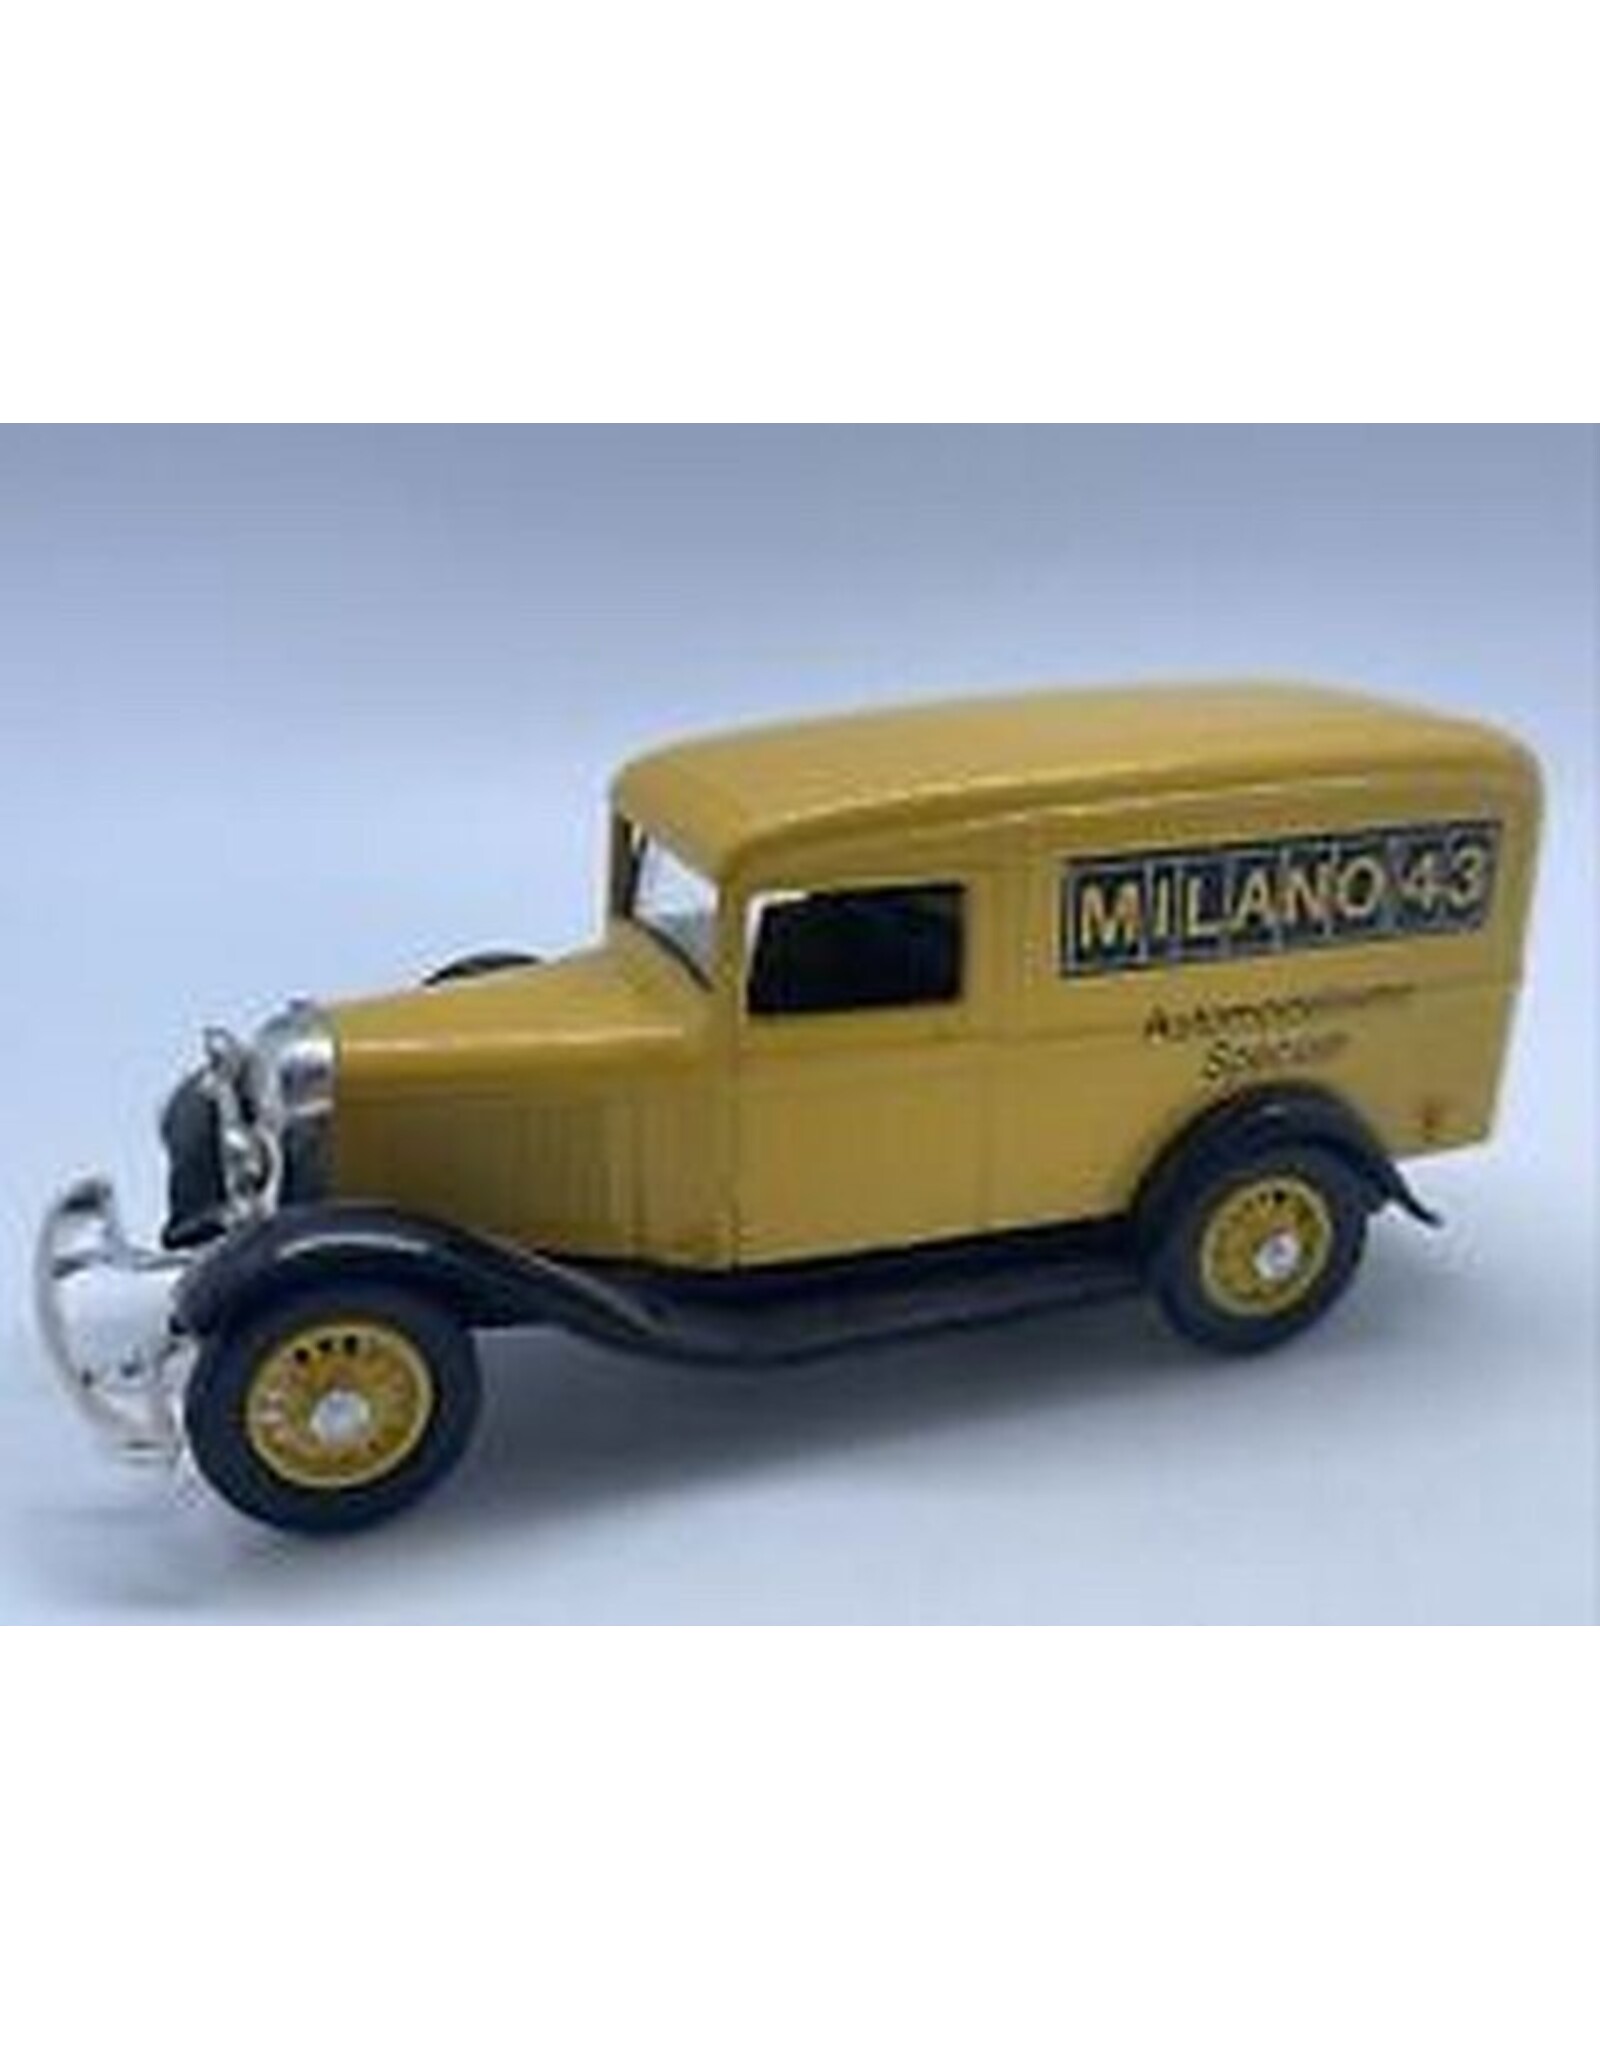 FORD Ford Van(1932) "Milano 43"